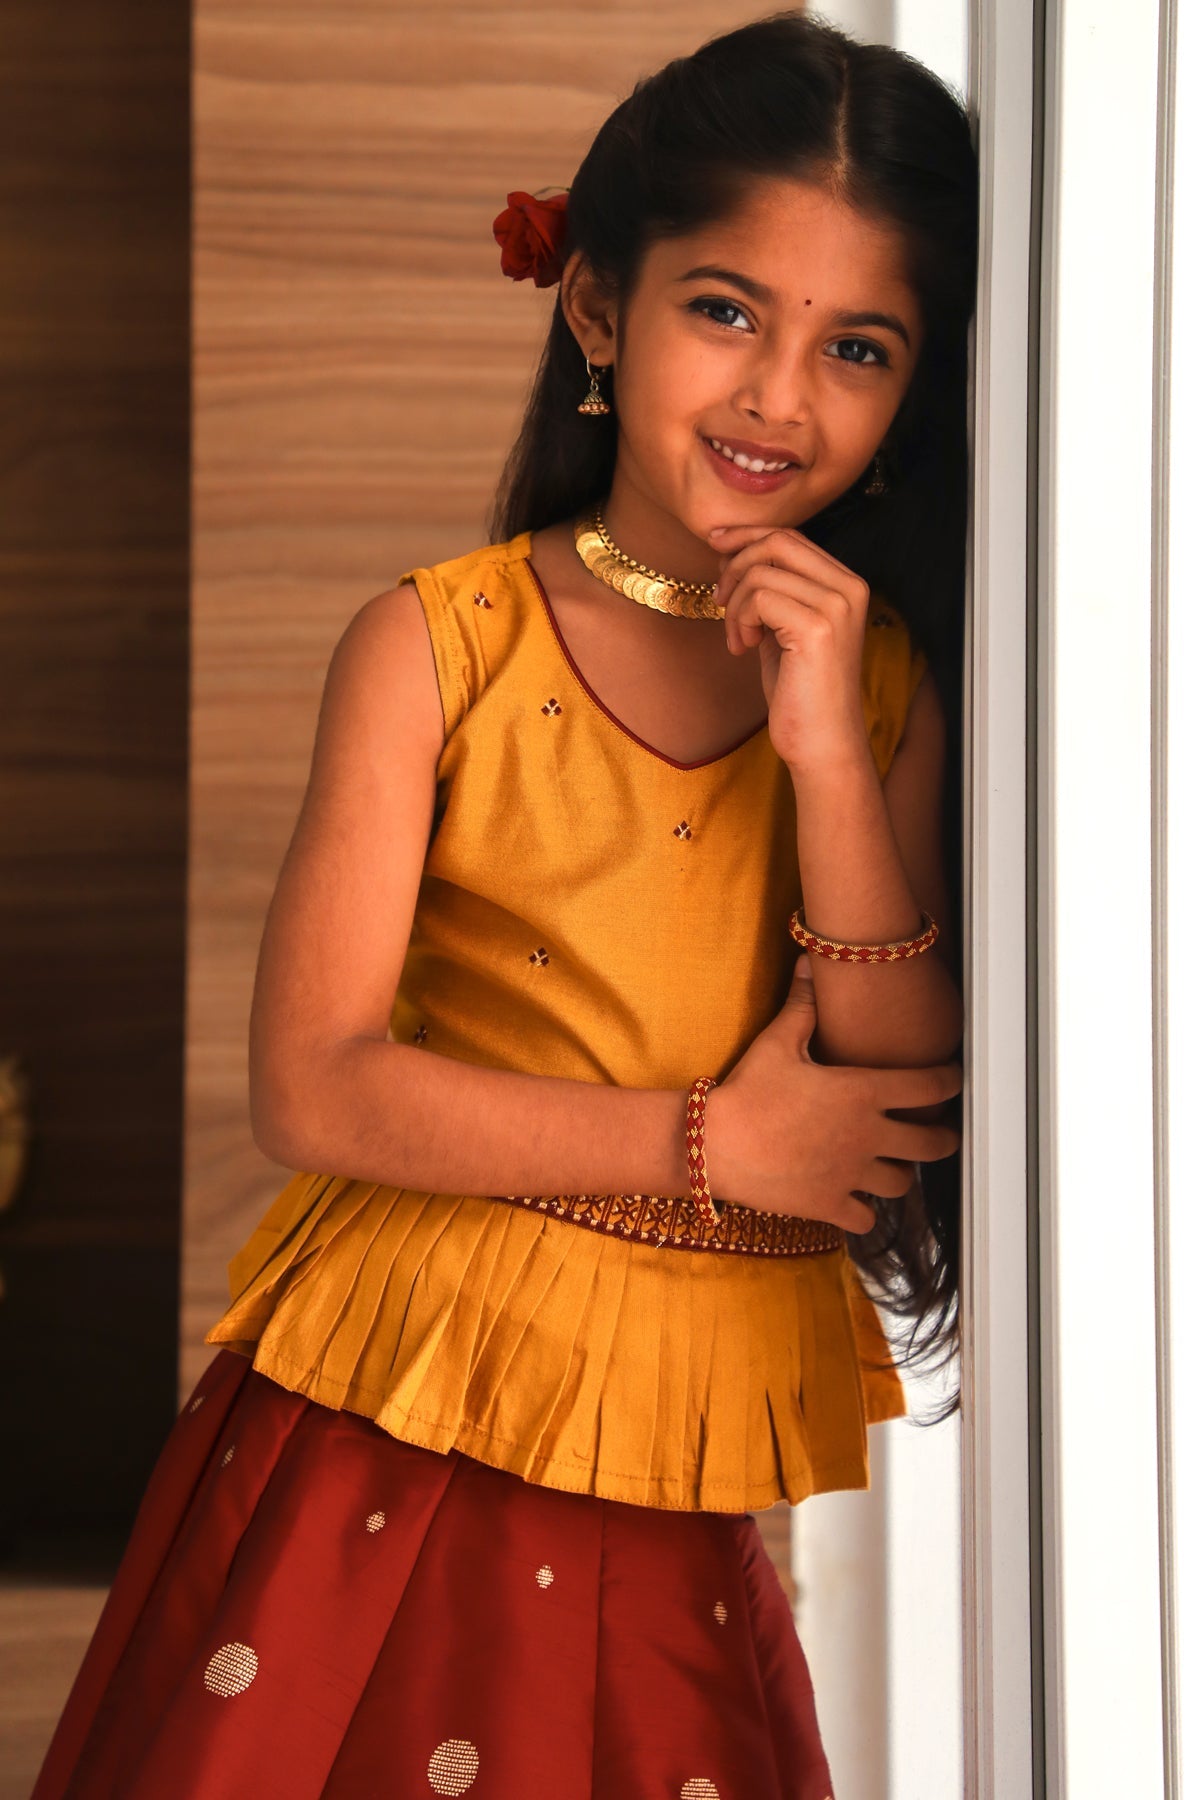 All Over Ethnic Motif Embroidered Sleeveless Top & Nandhi Motif Printed Skirt Set - Mustard & Maroon